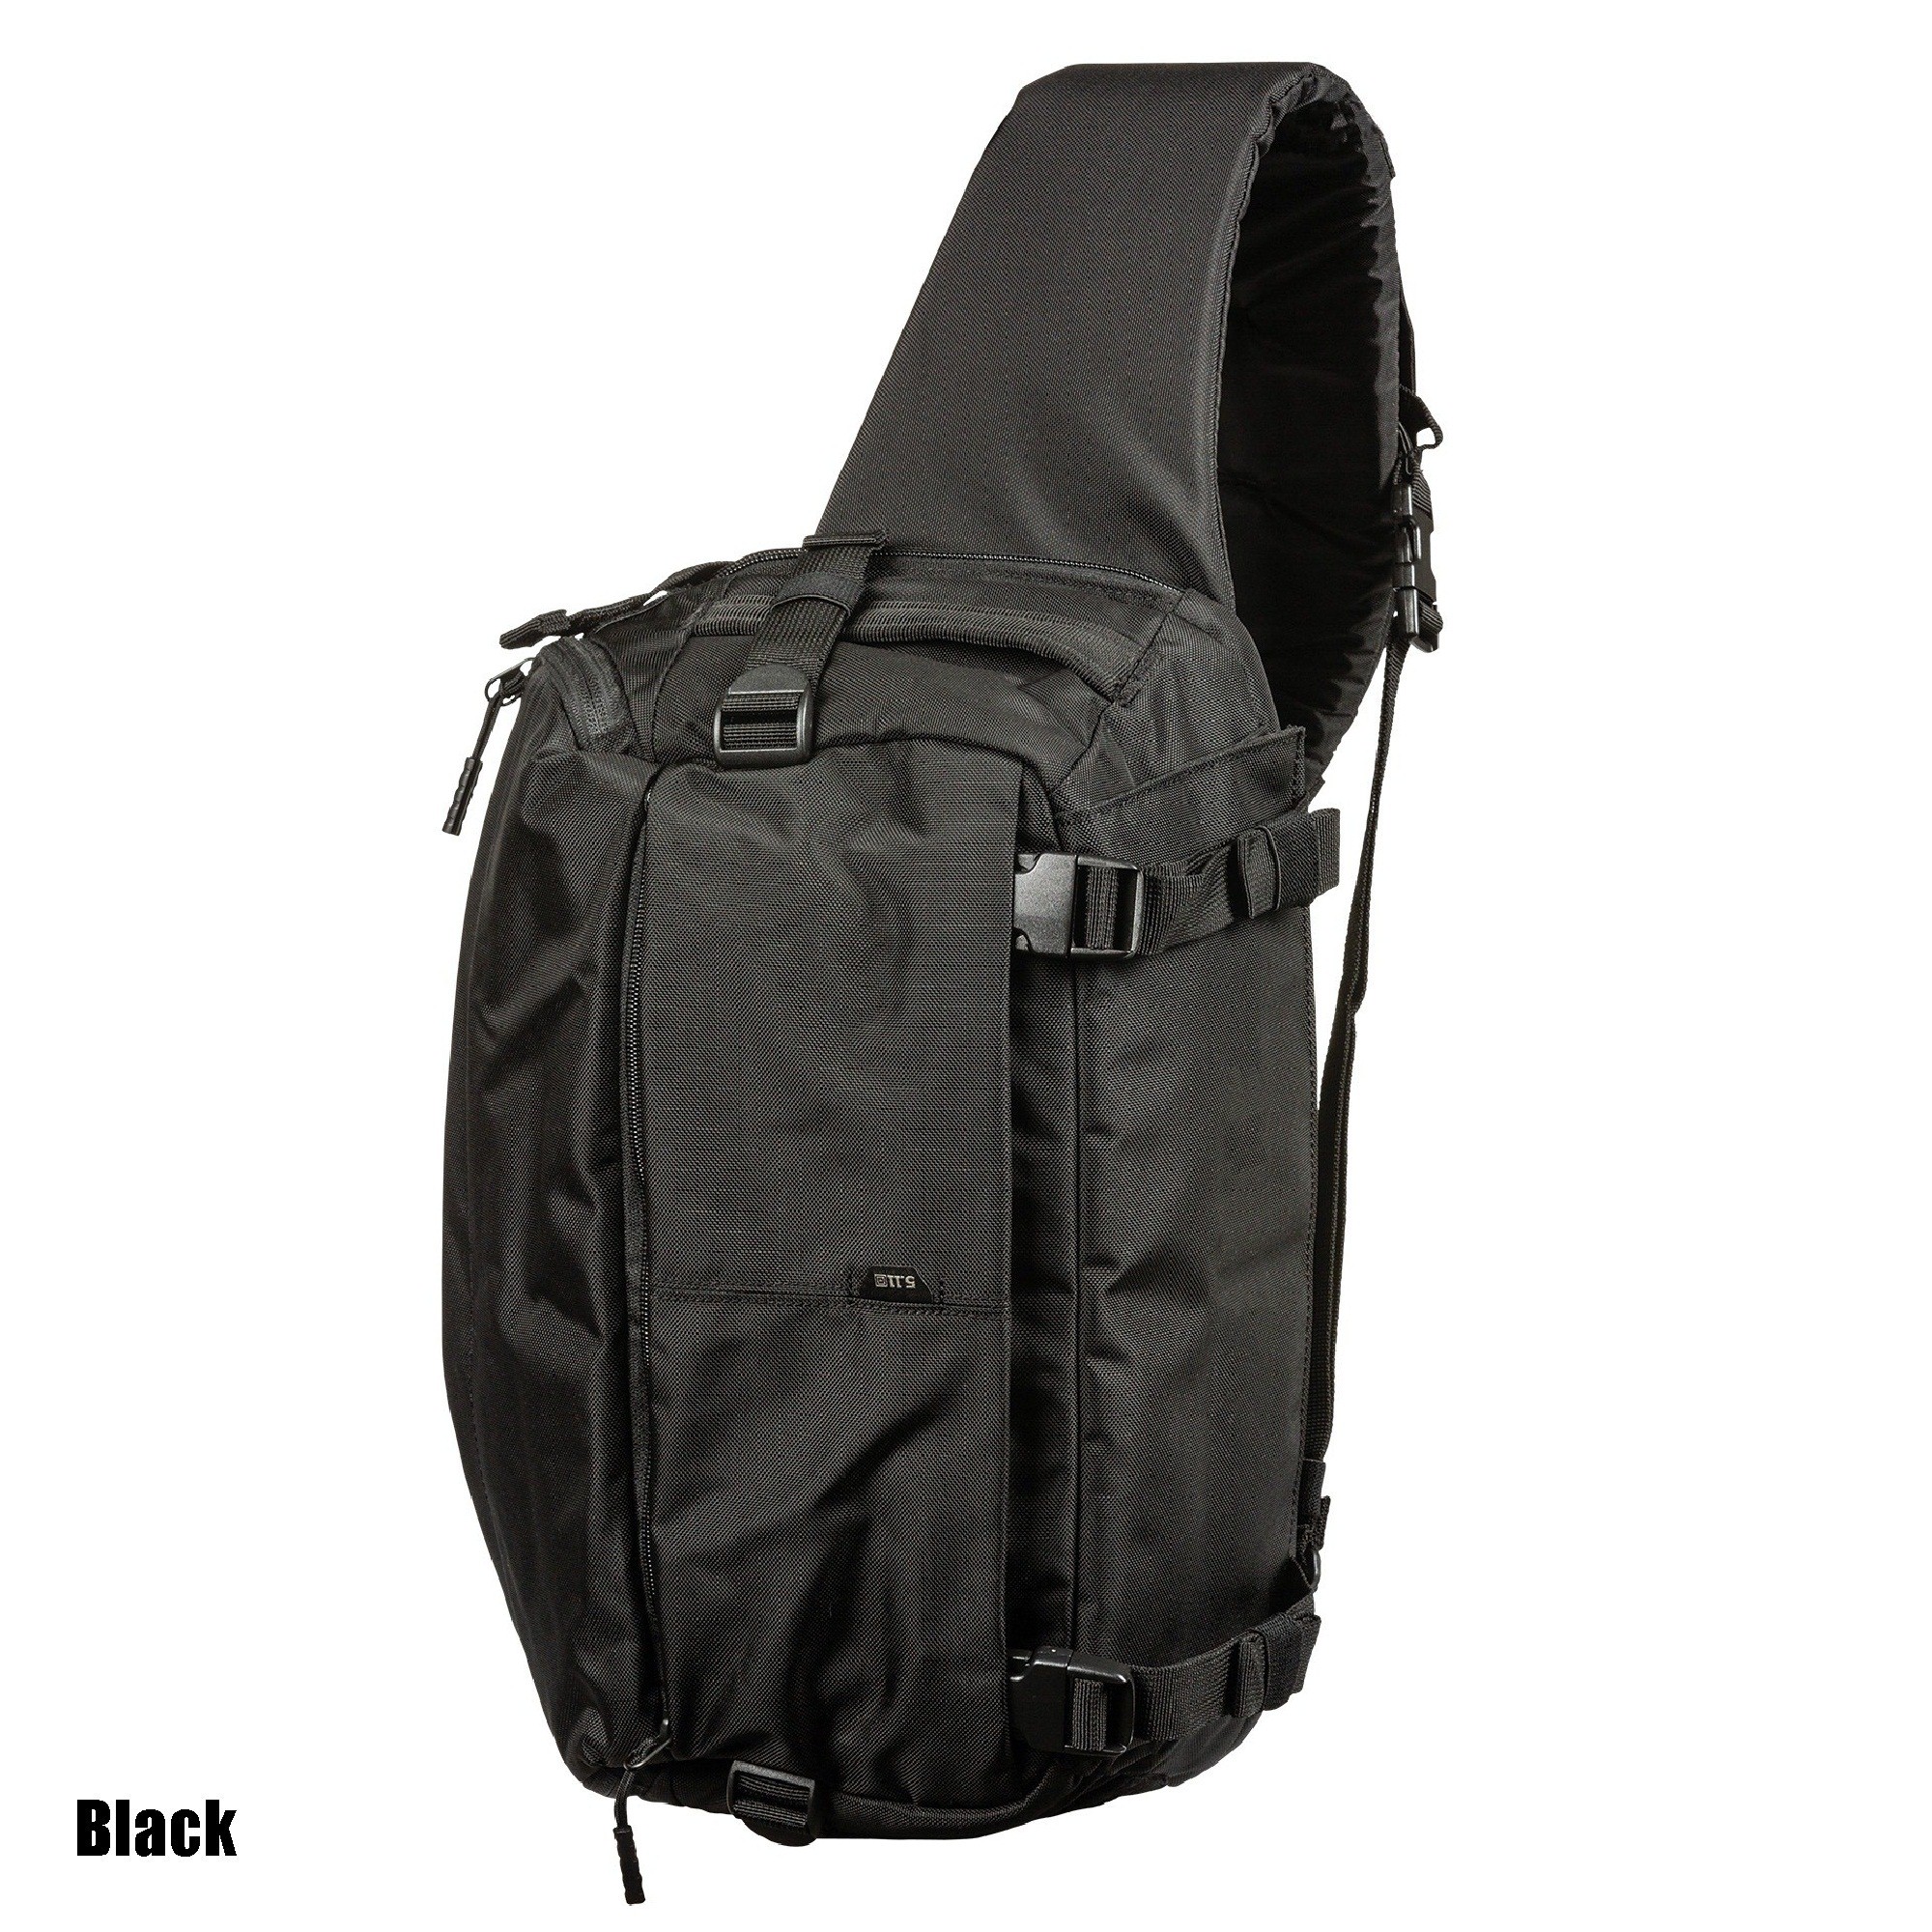 5.11 LV10 Backpack